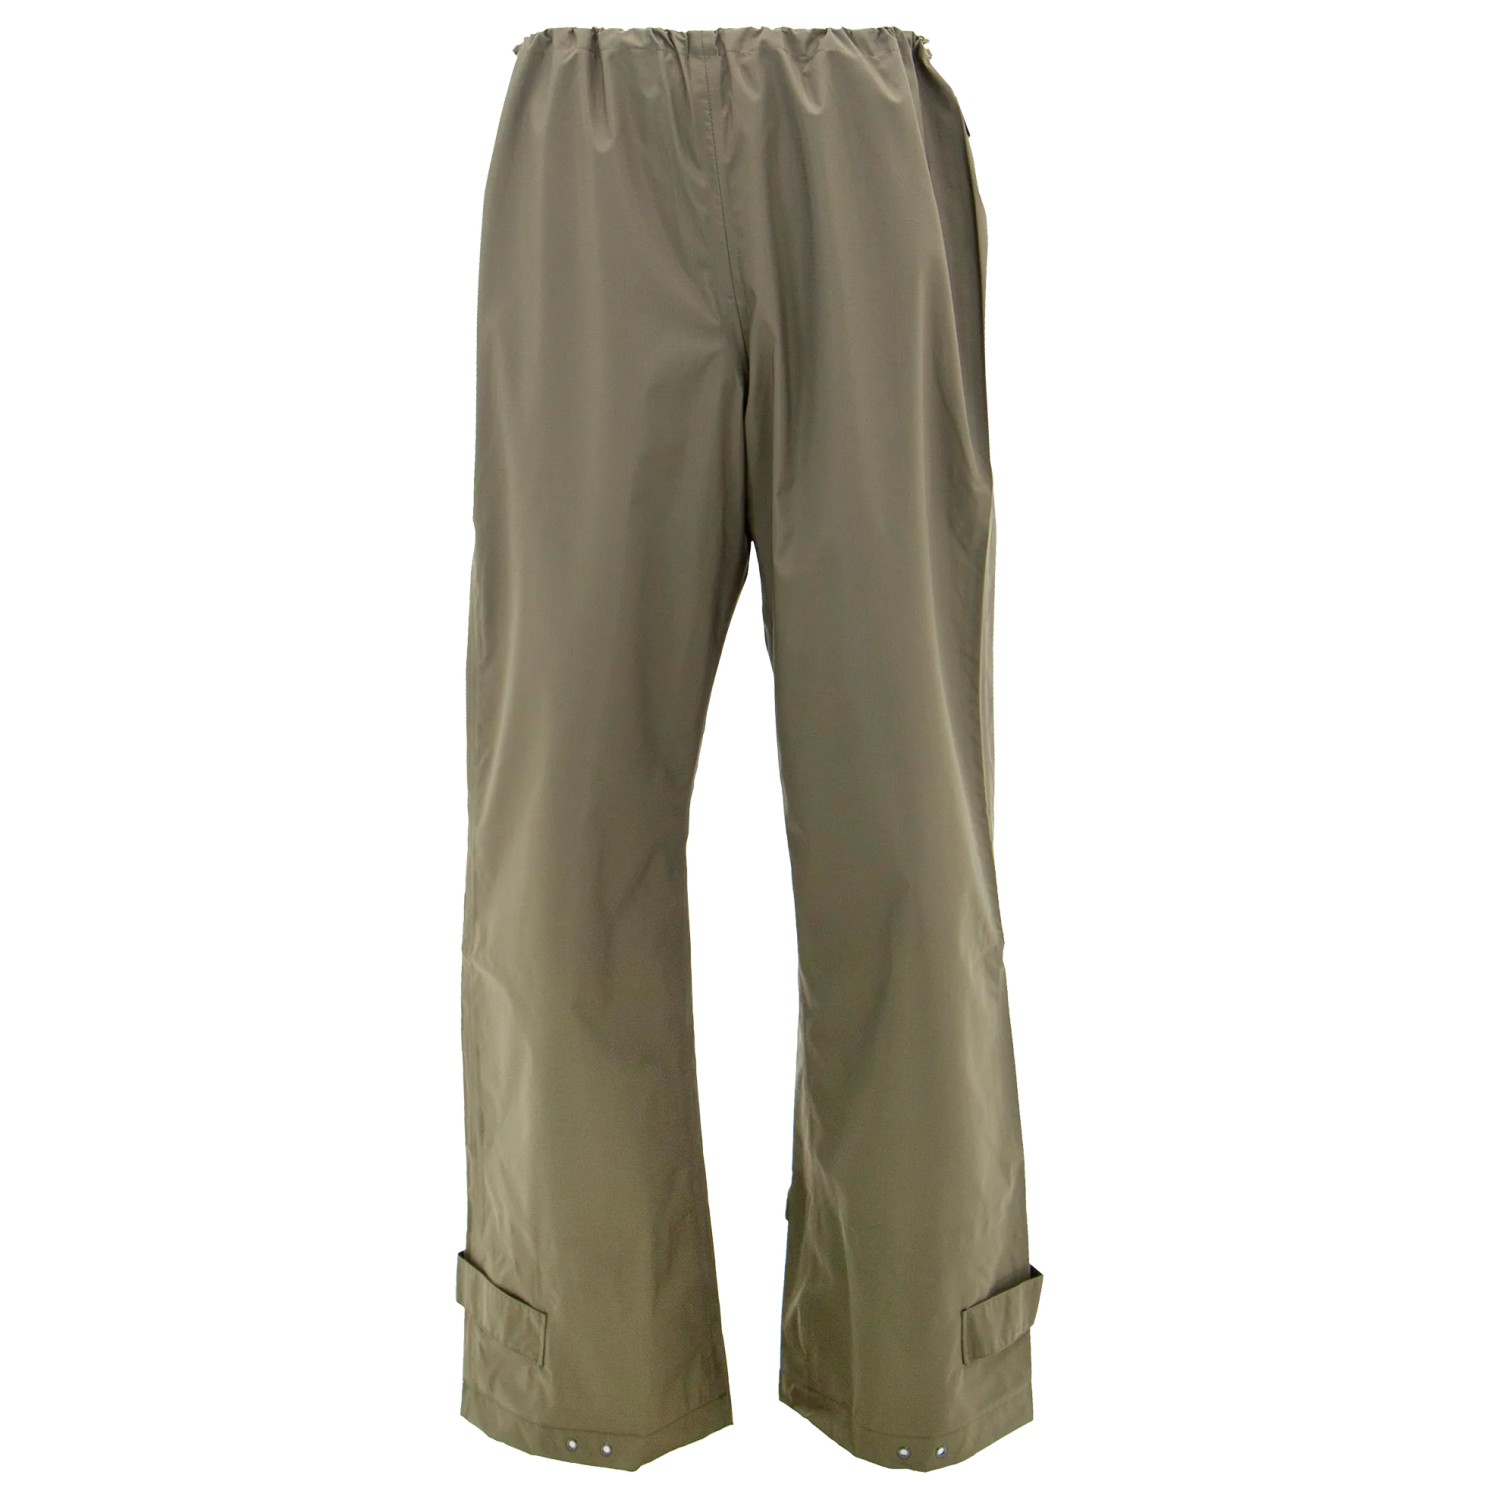 Дождевые брюки Carinthia Survival Rainsuit Trousers, оливковый